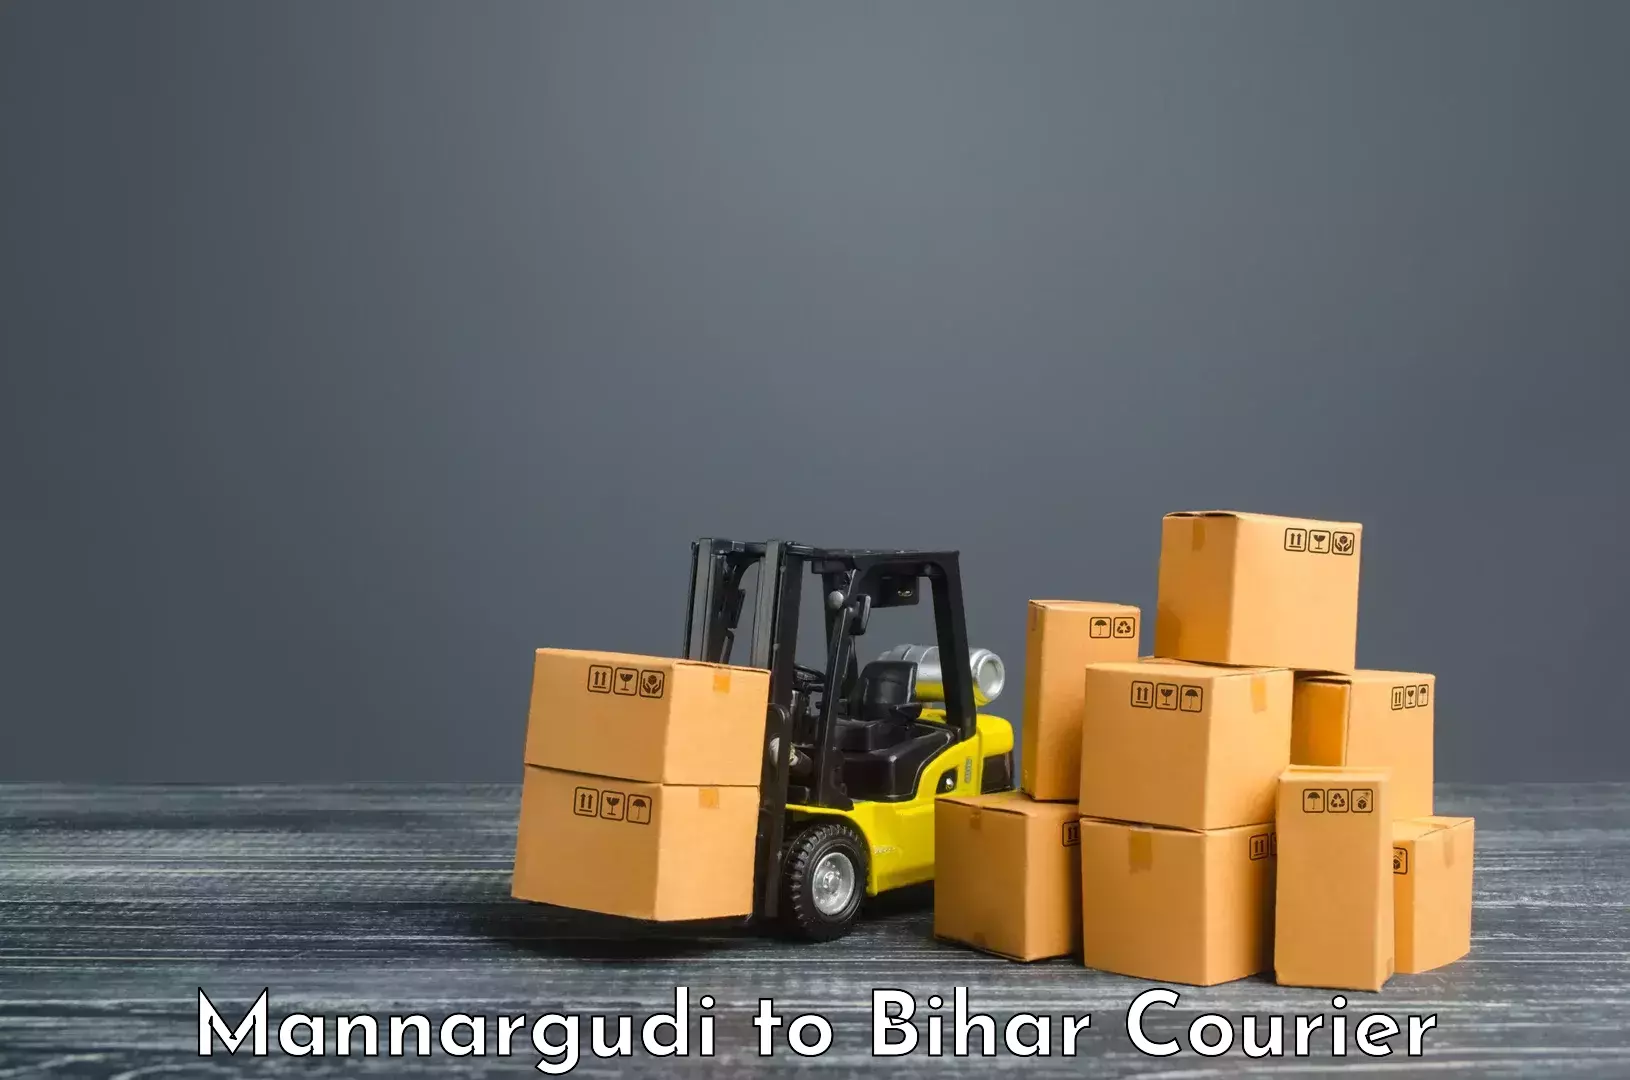 Courier service partnerships Mannargudi to Kochas